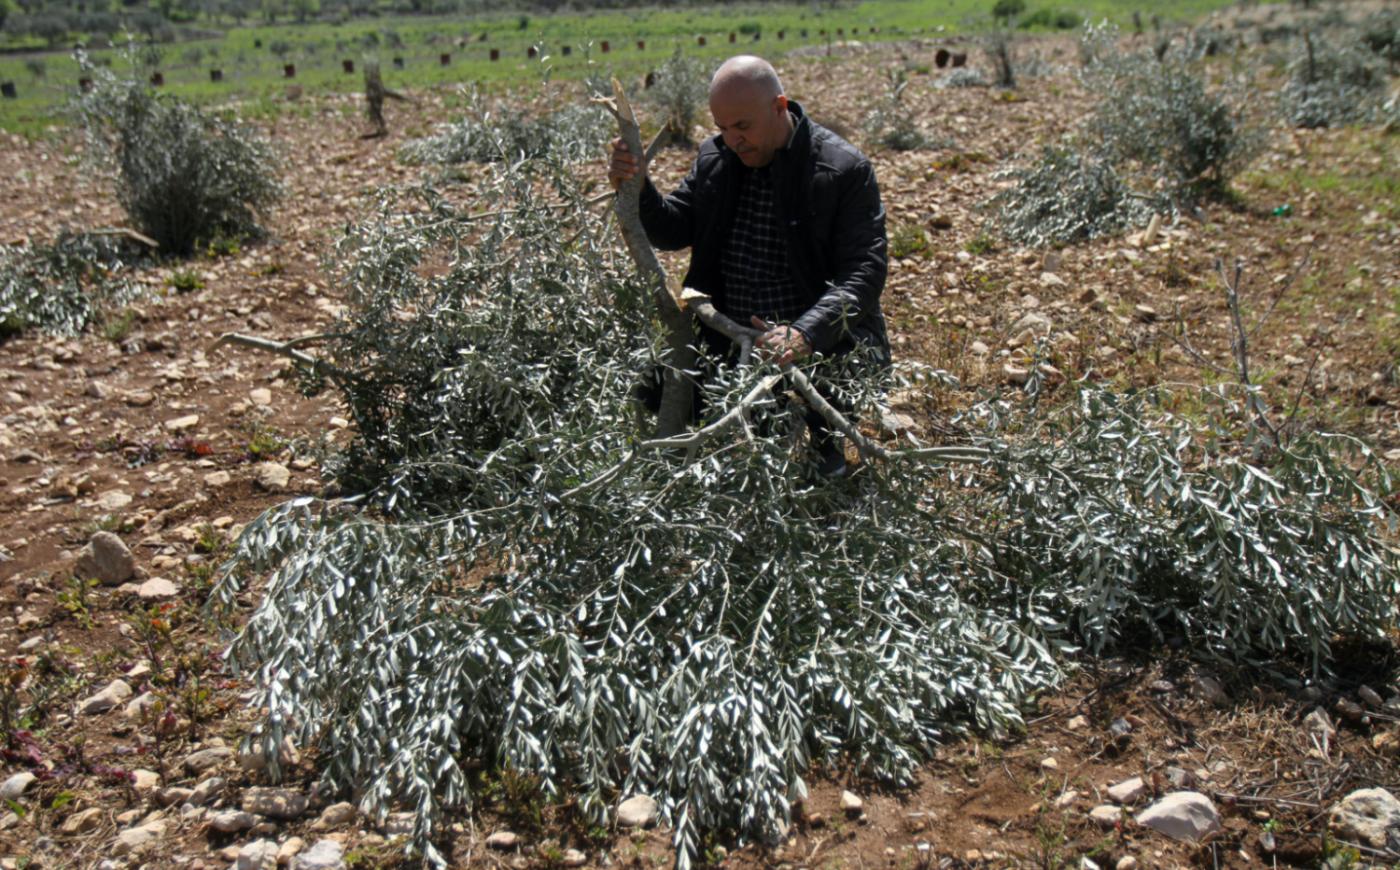 Pasukan Israel Cabut Dan Hancurkan 2.000 Pohon Zaitun Milik Warga Palestina Di Tepi Barat